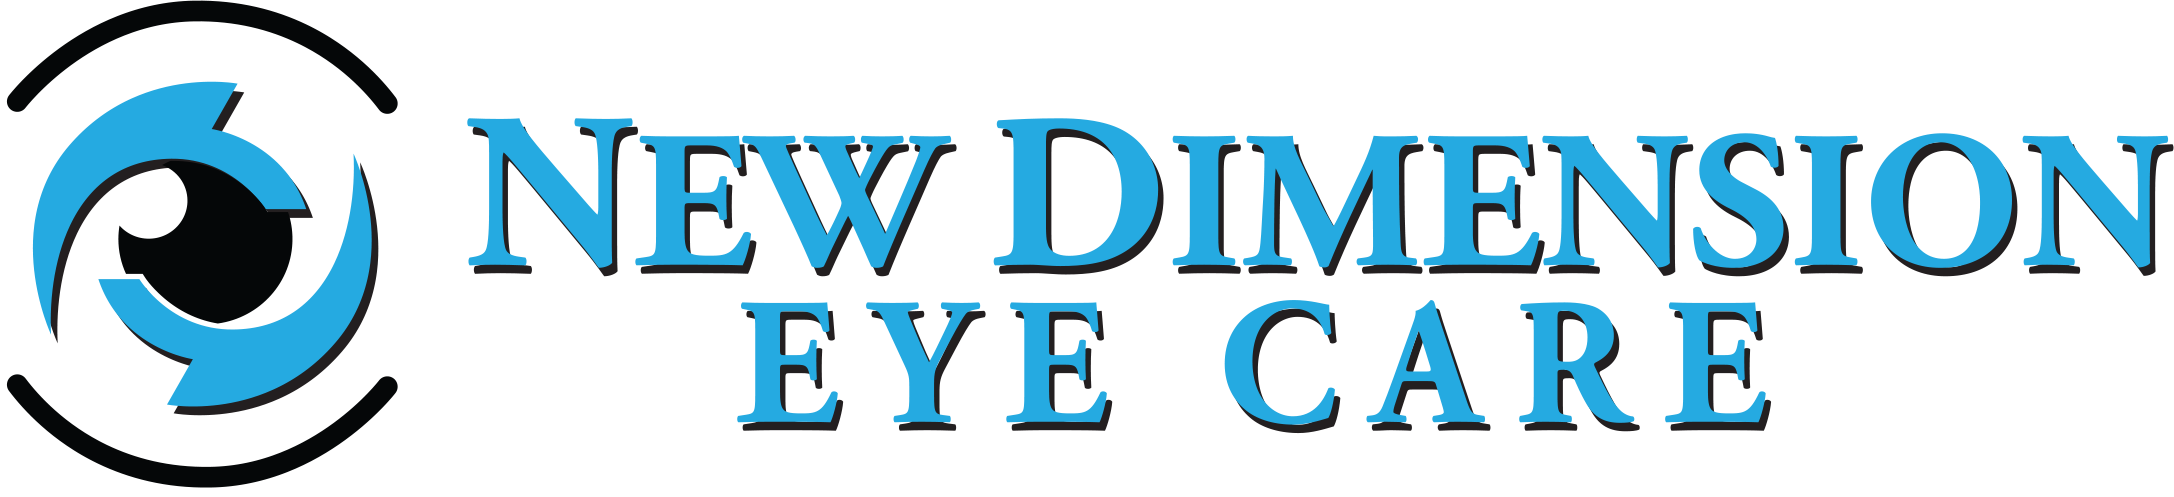 New Dimension Eye Care - Optometrist